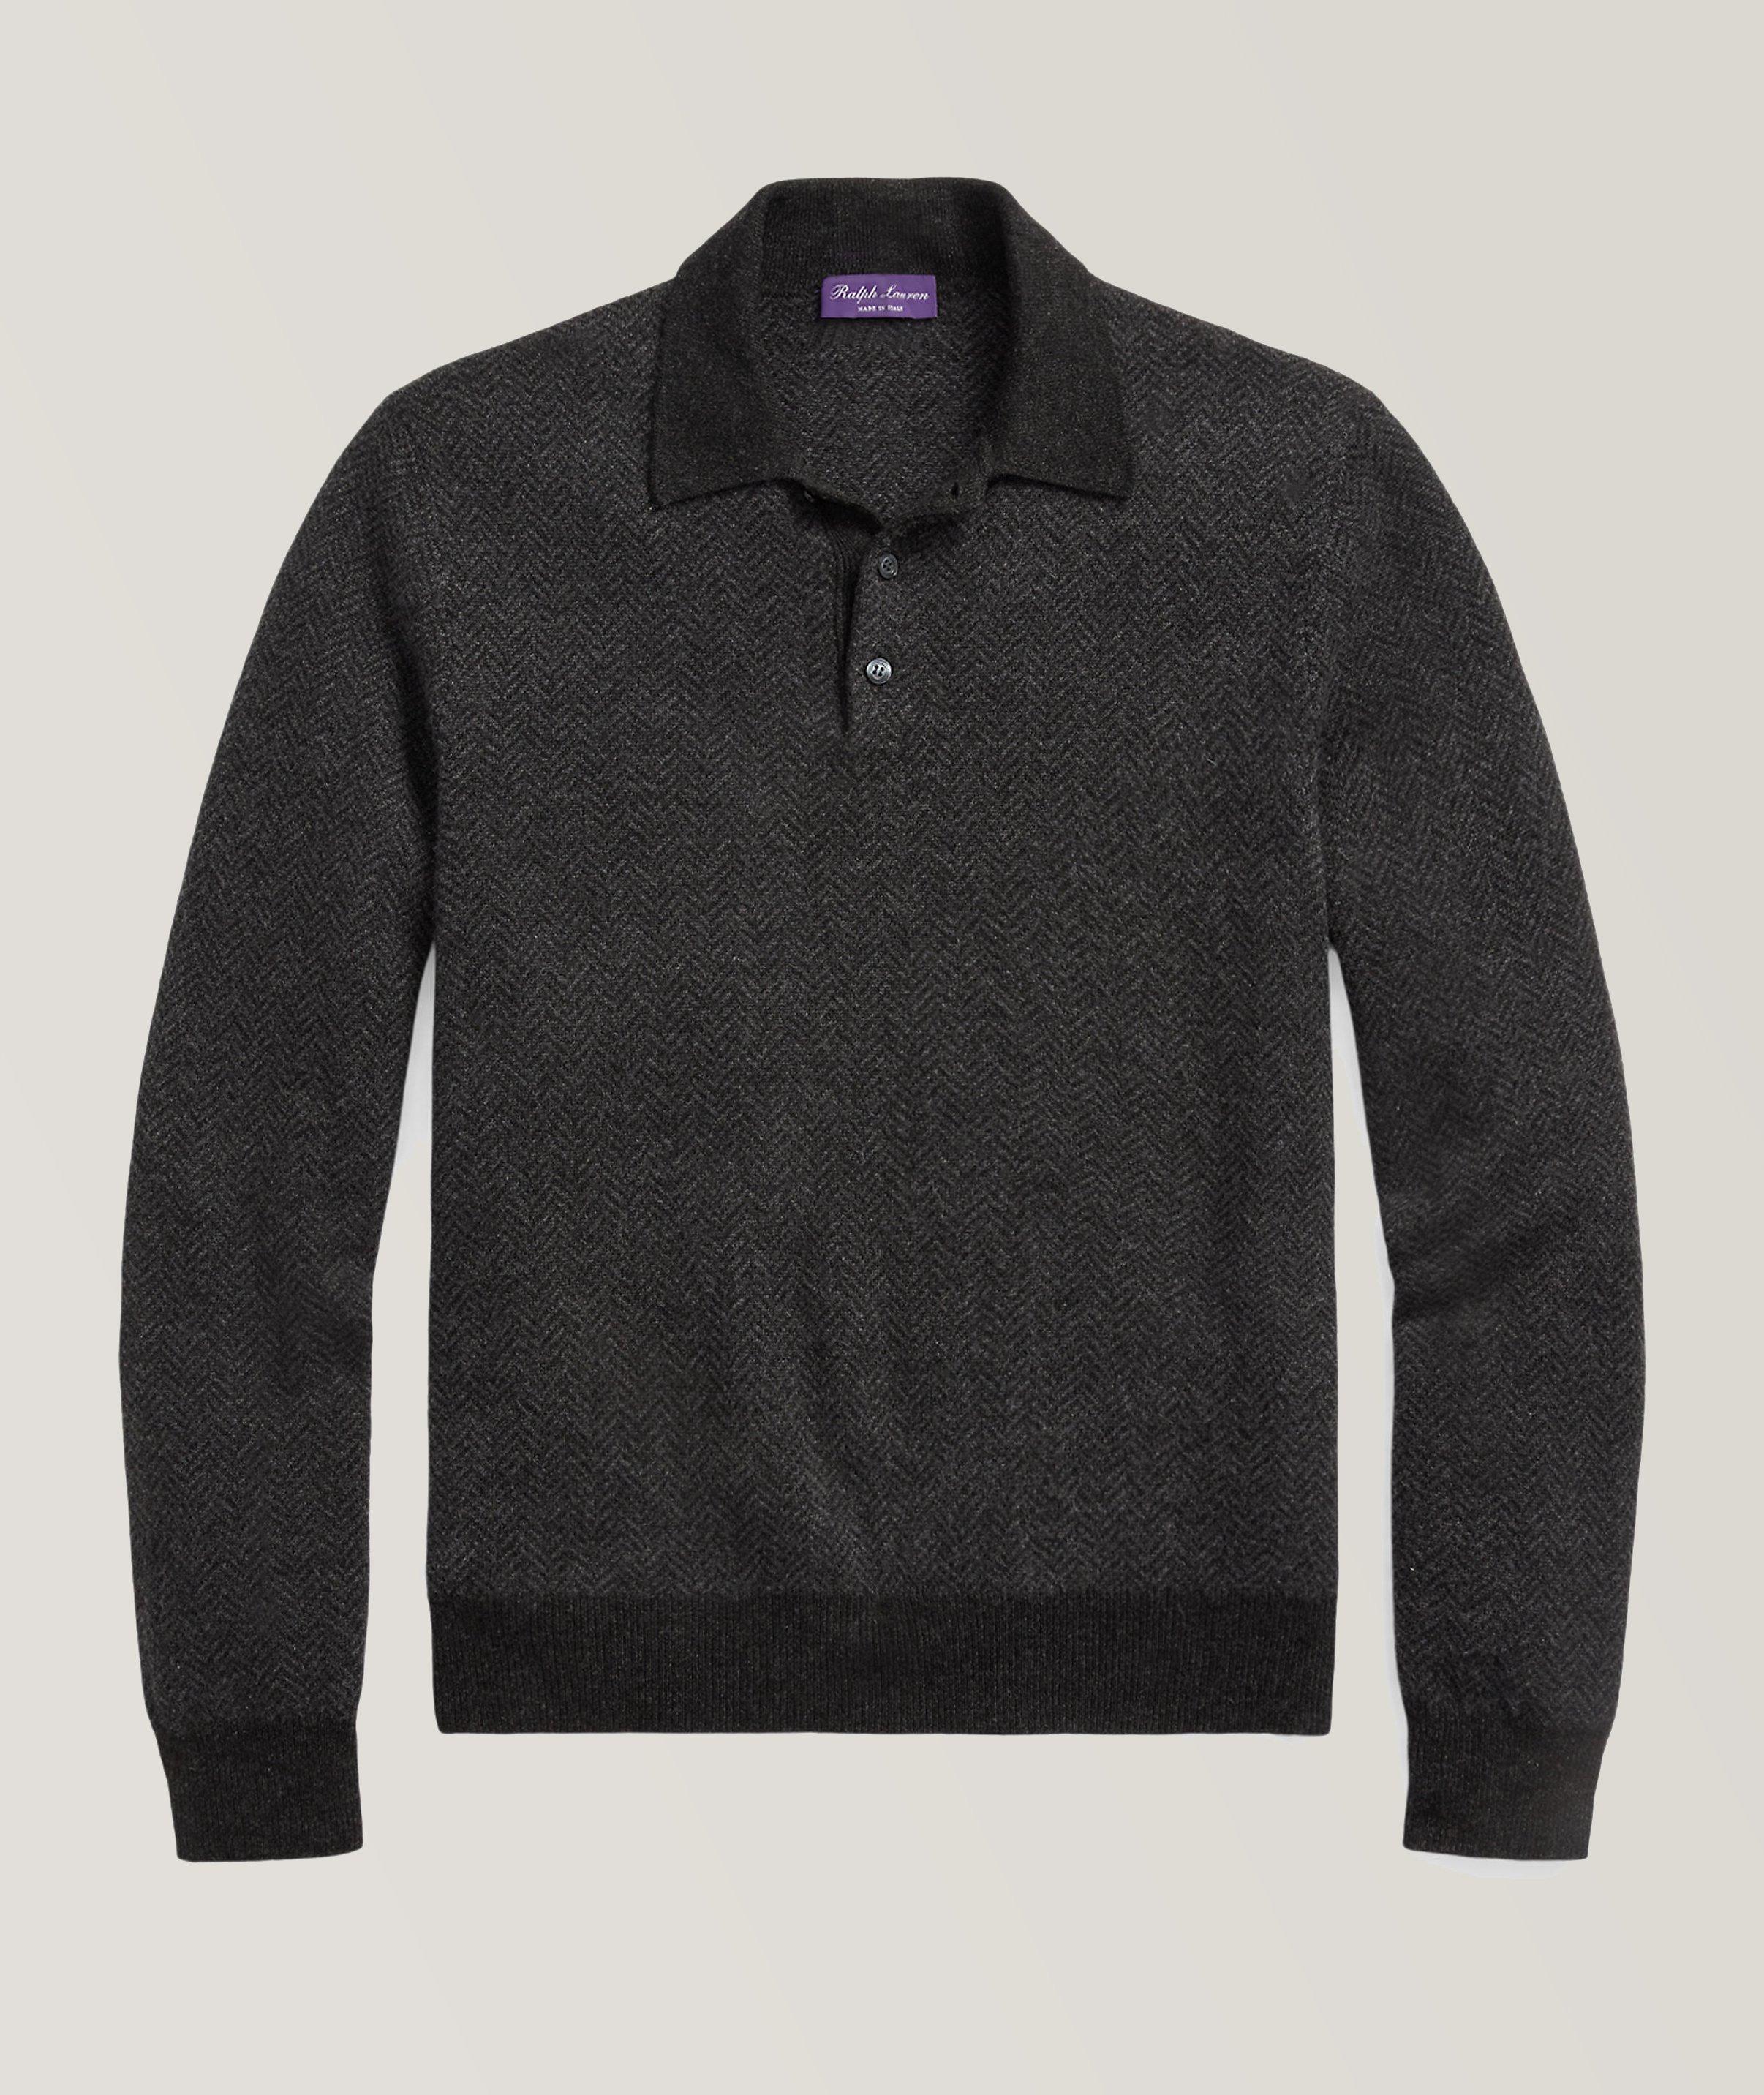 RALPH LAUREN Purple Label Grey Knit Wool Cashmere Jogger Pants MEDIUM NWT